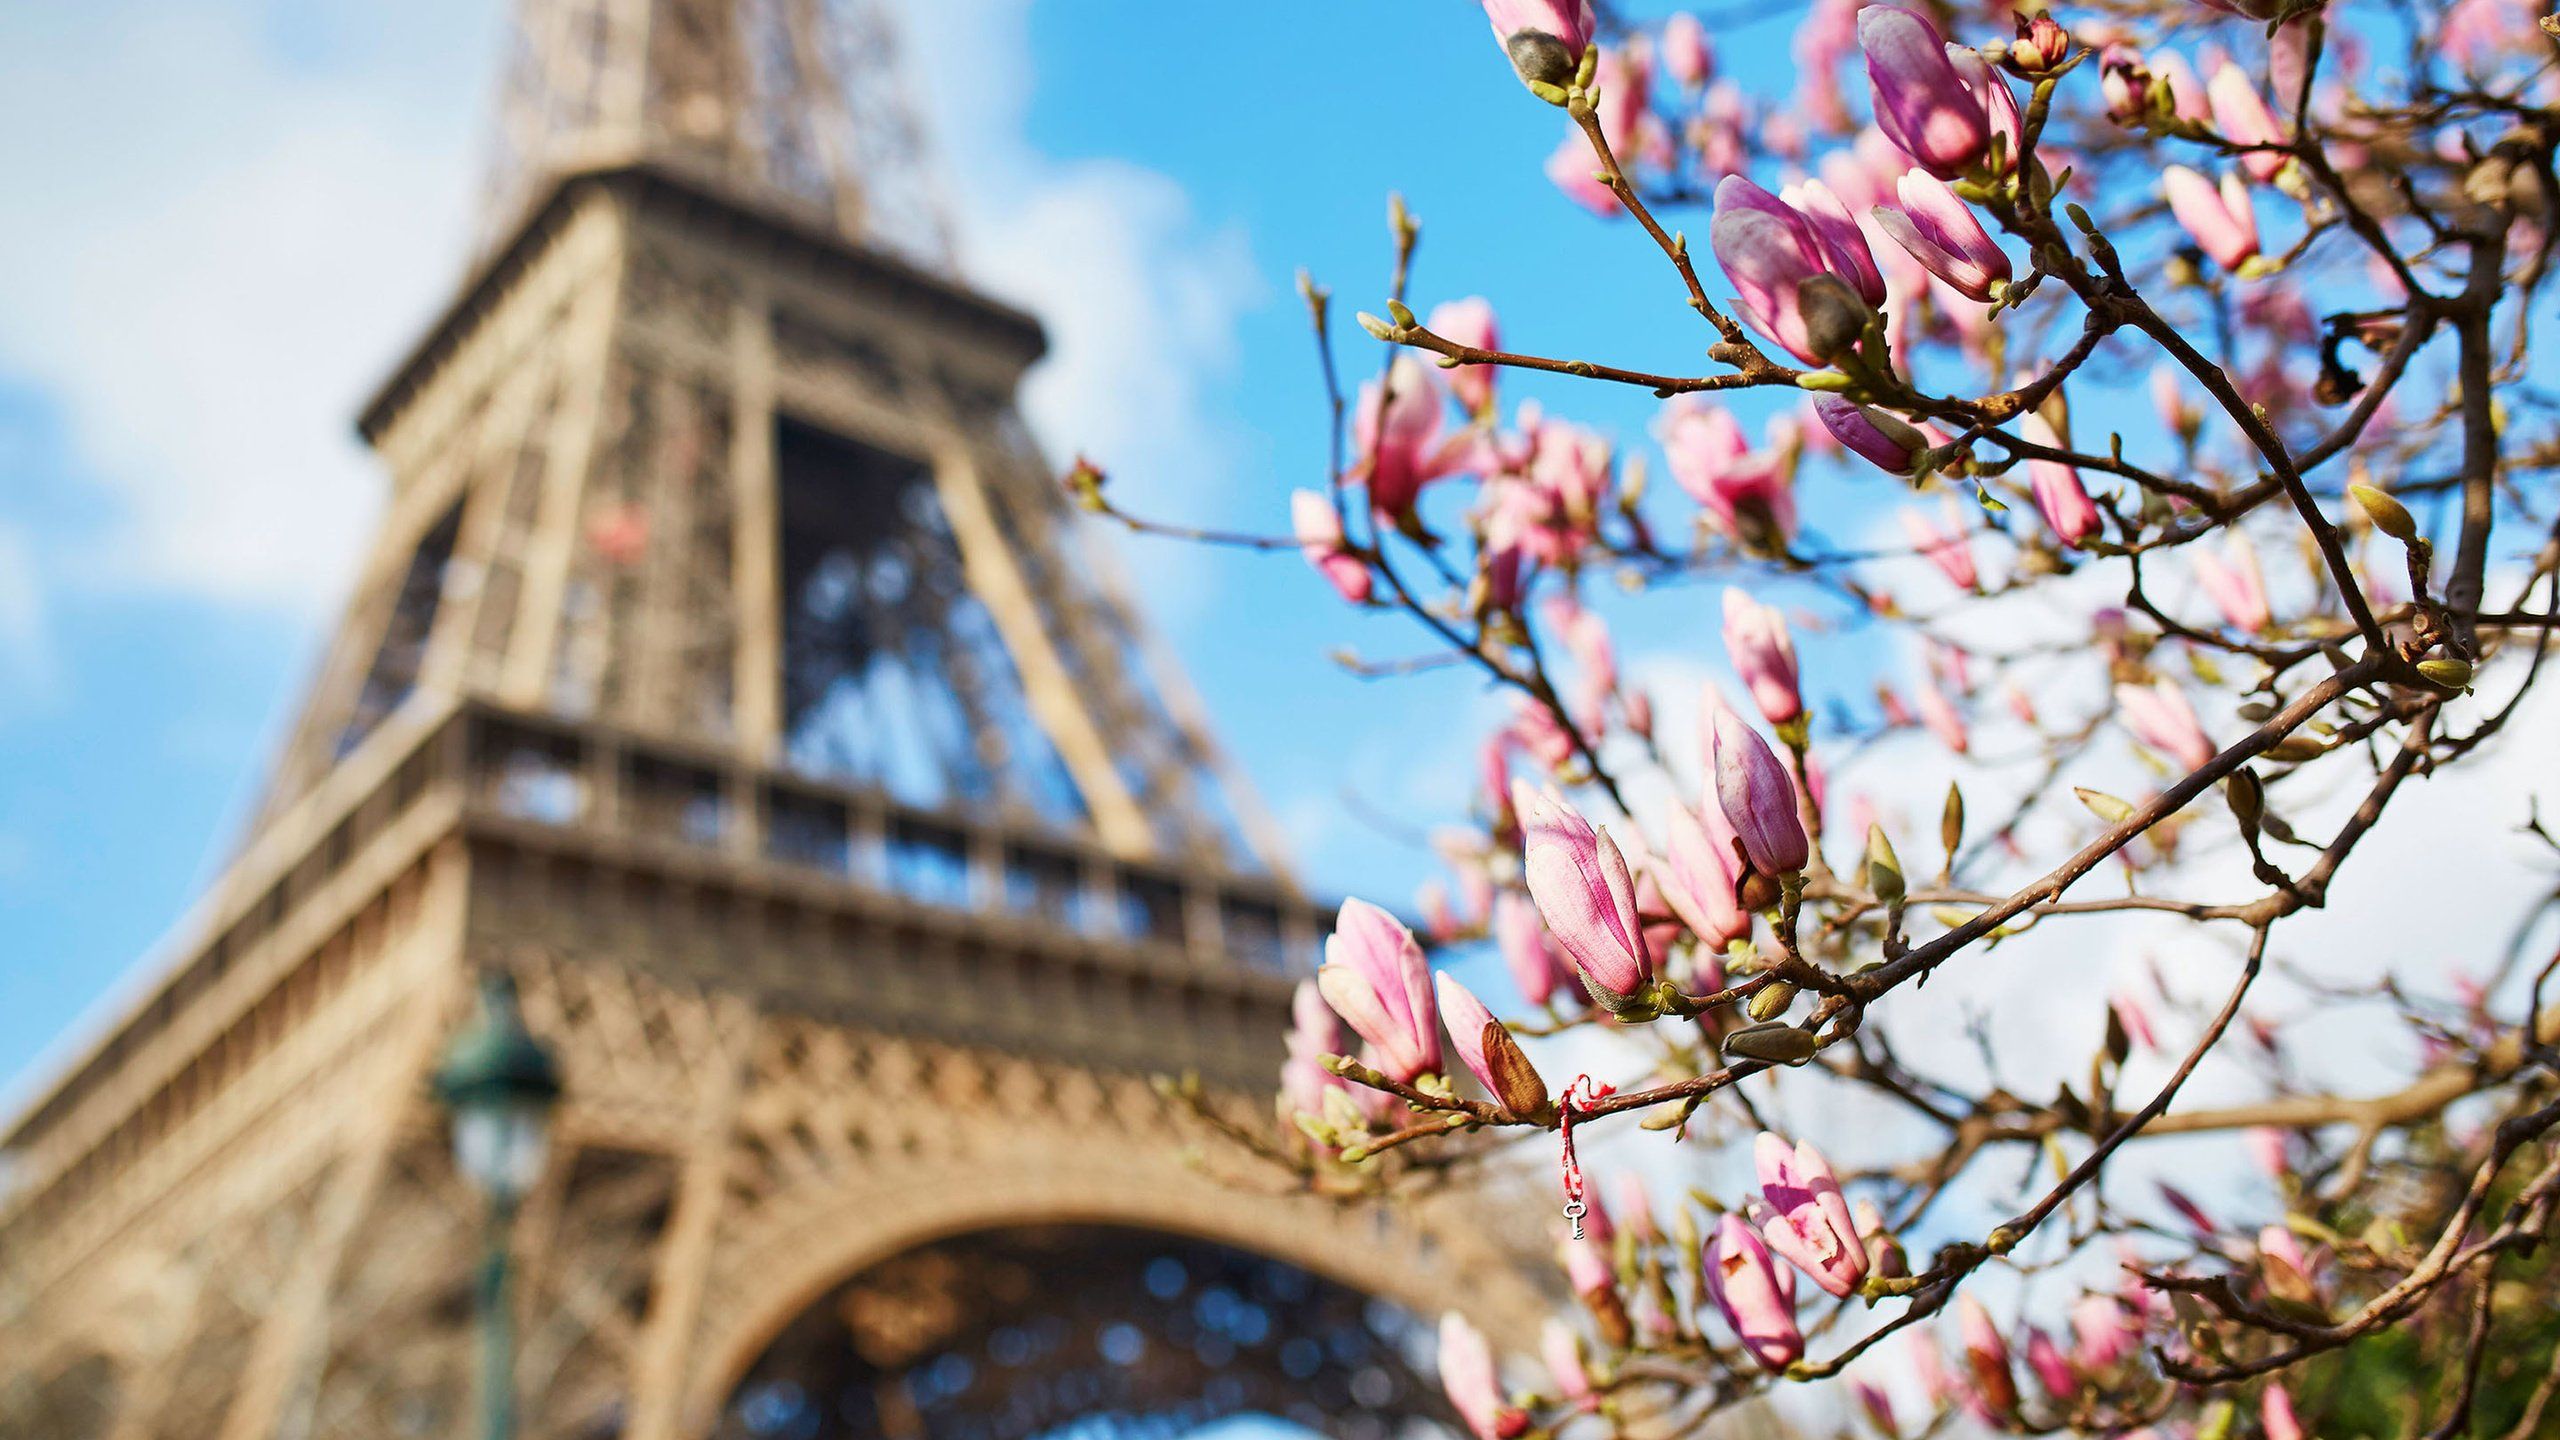 Wallpaper download paris, spring, france, eiffel tower, magnolia